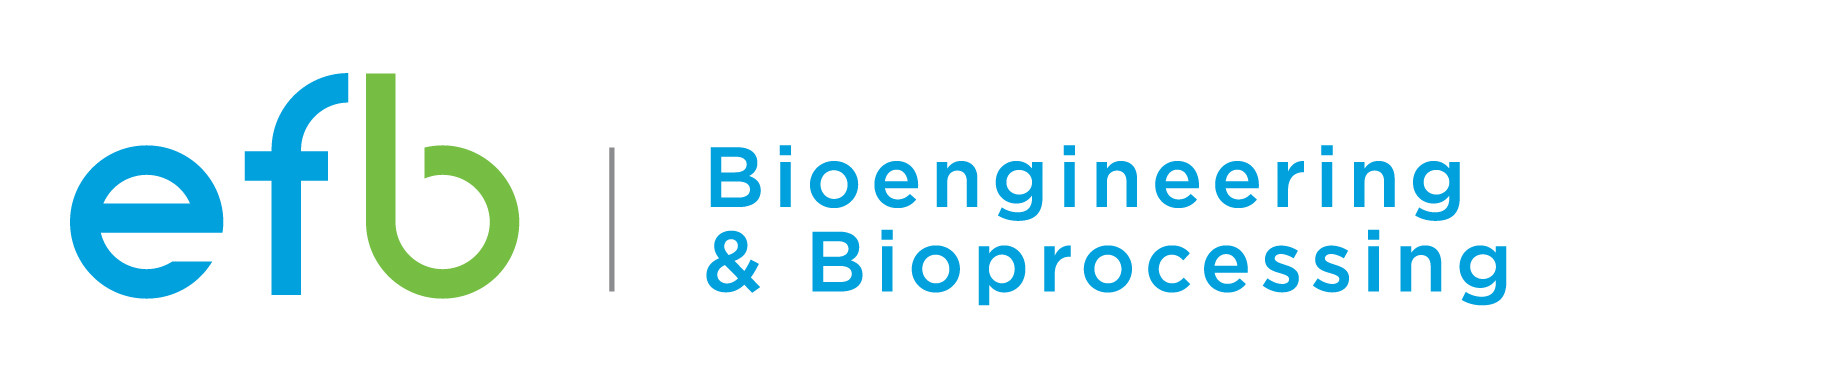 EFB Bioengineering and Bioprocessing Division